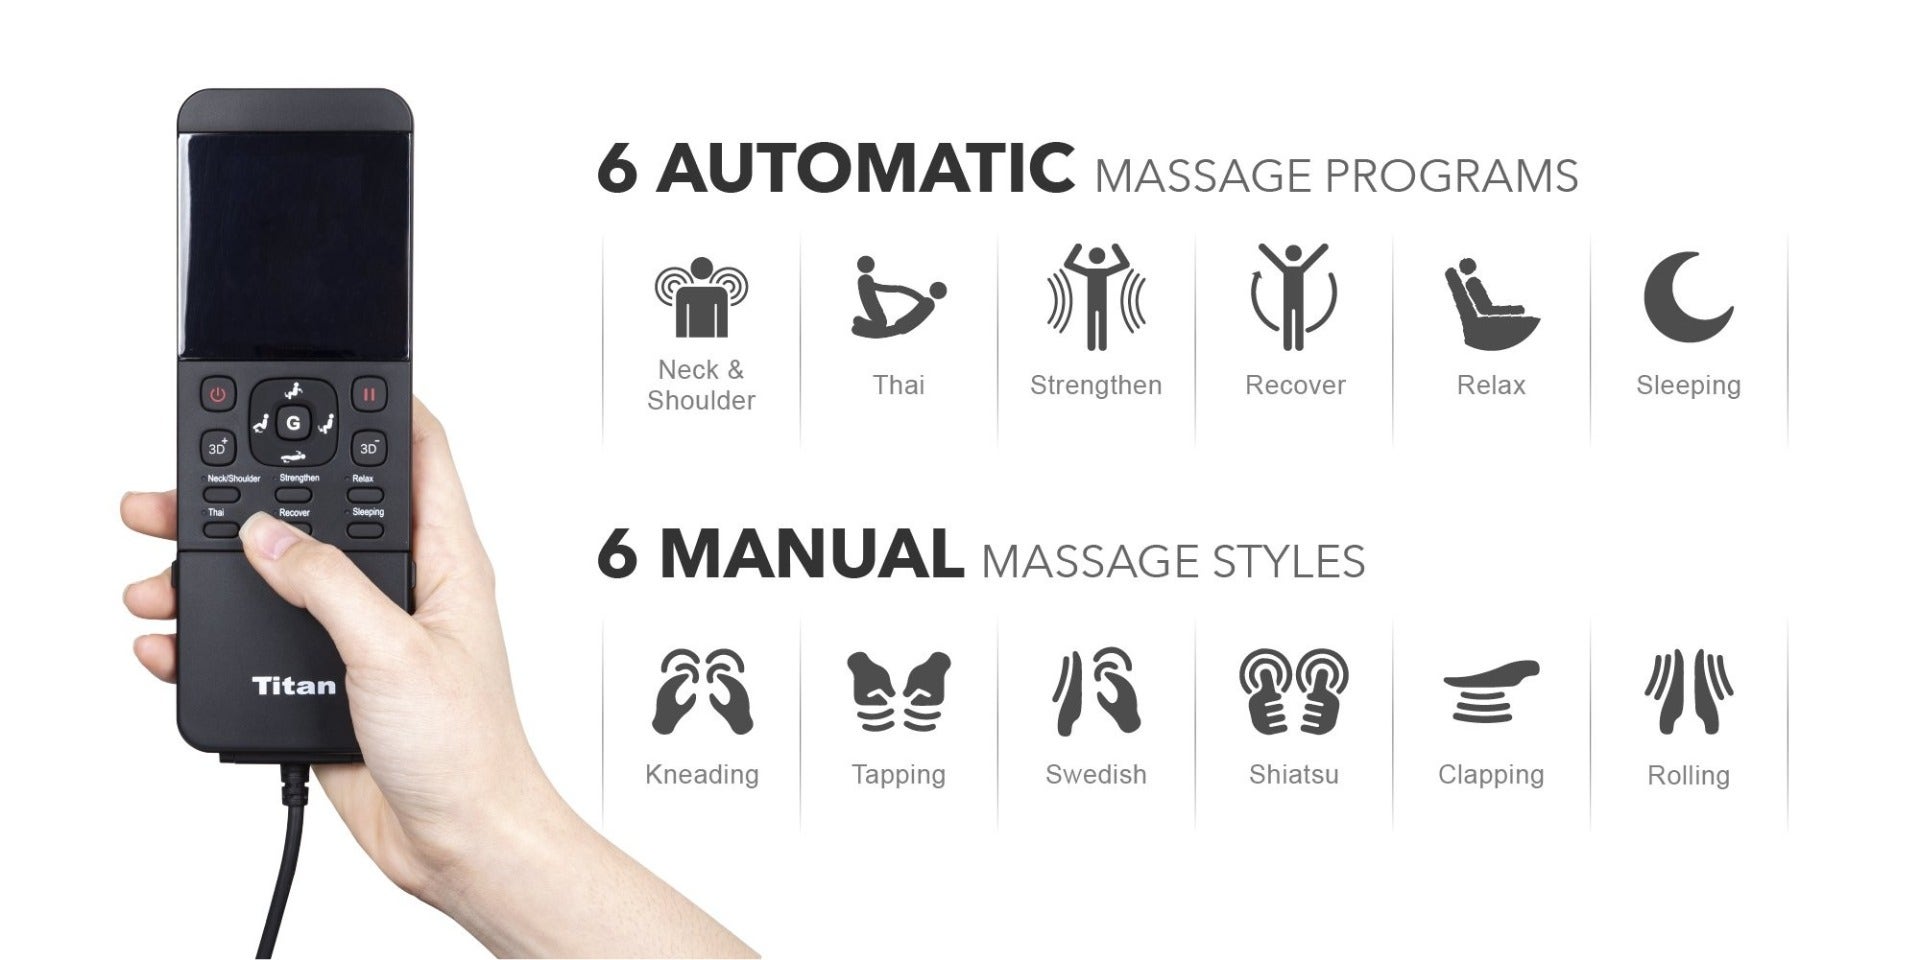 titan 3d prestige massage modes programs